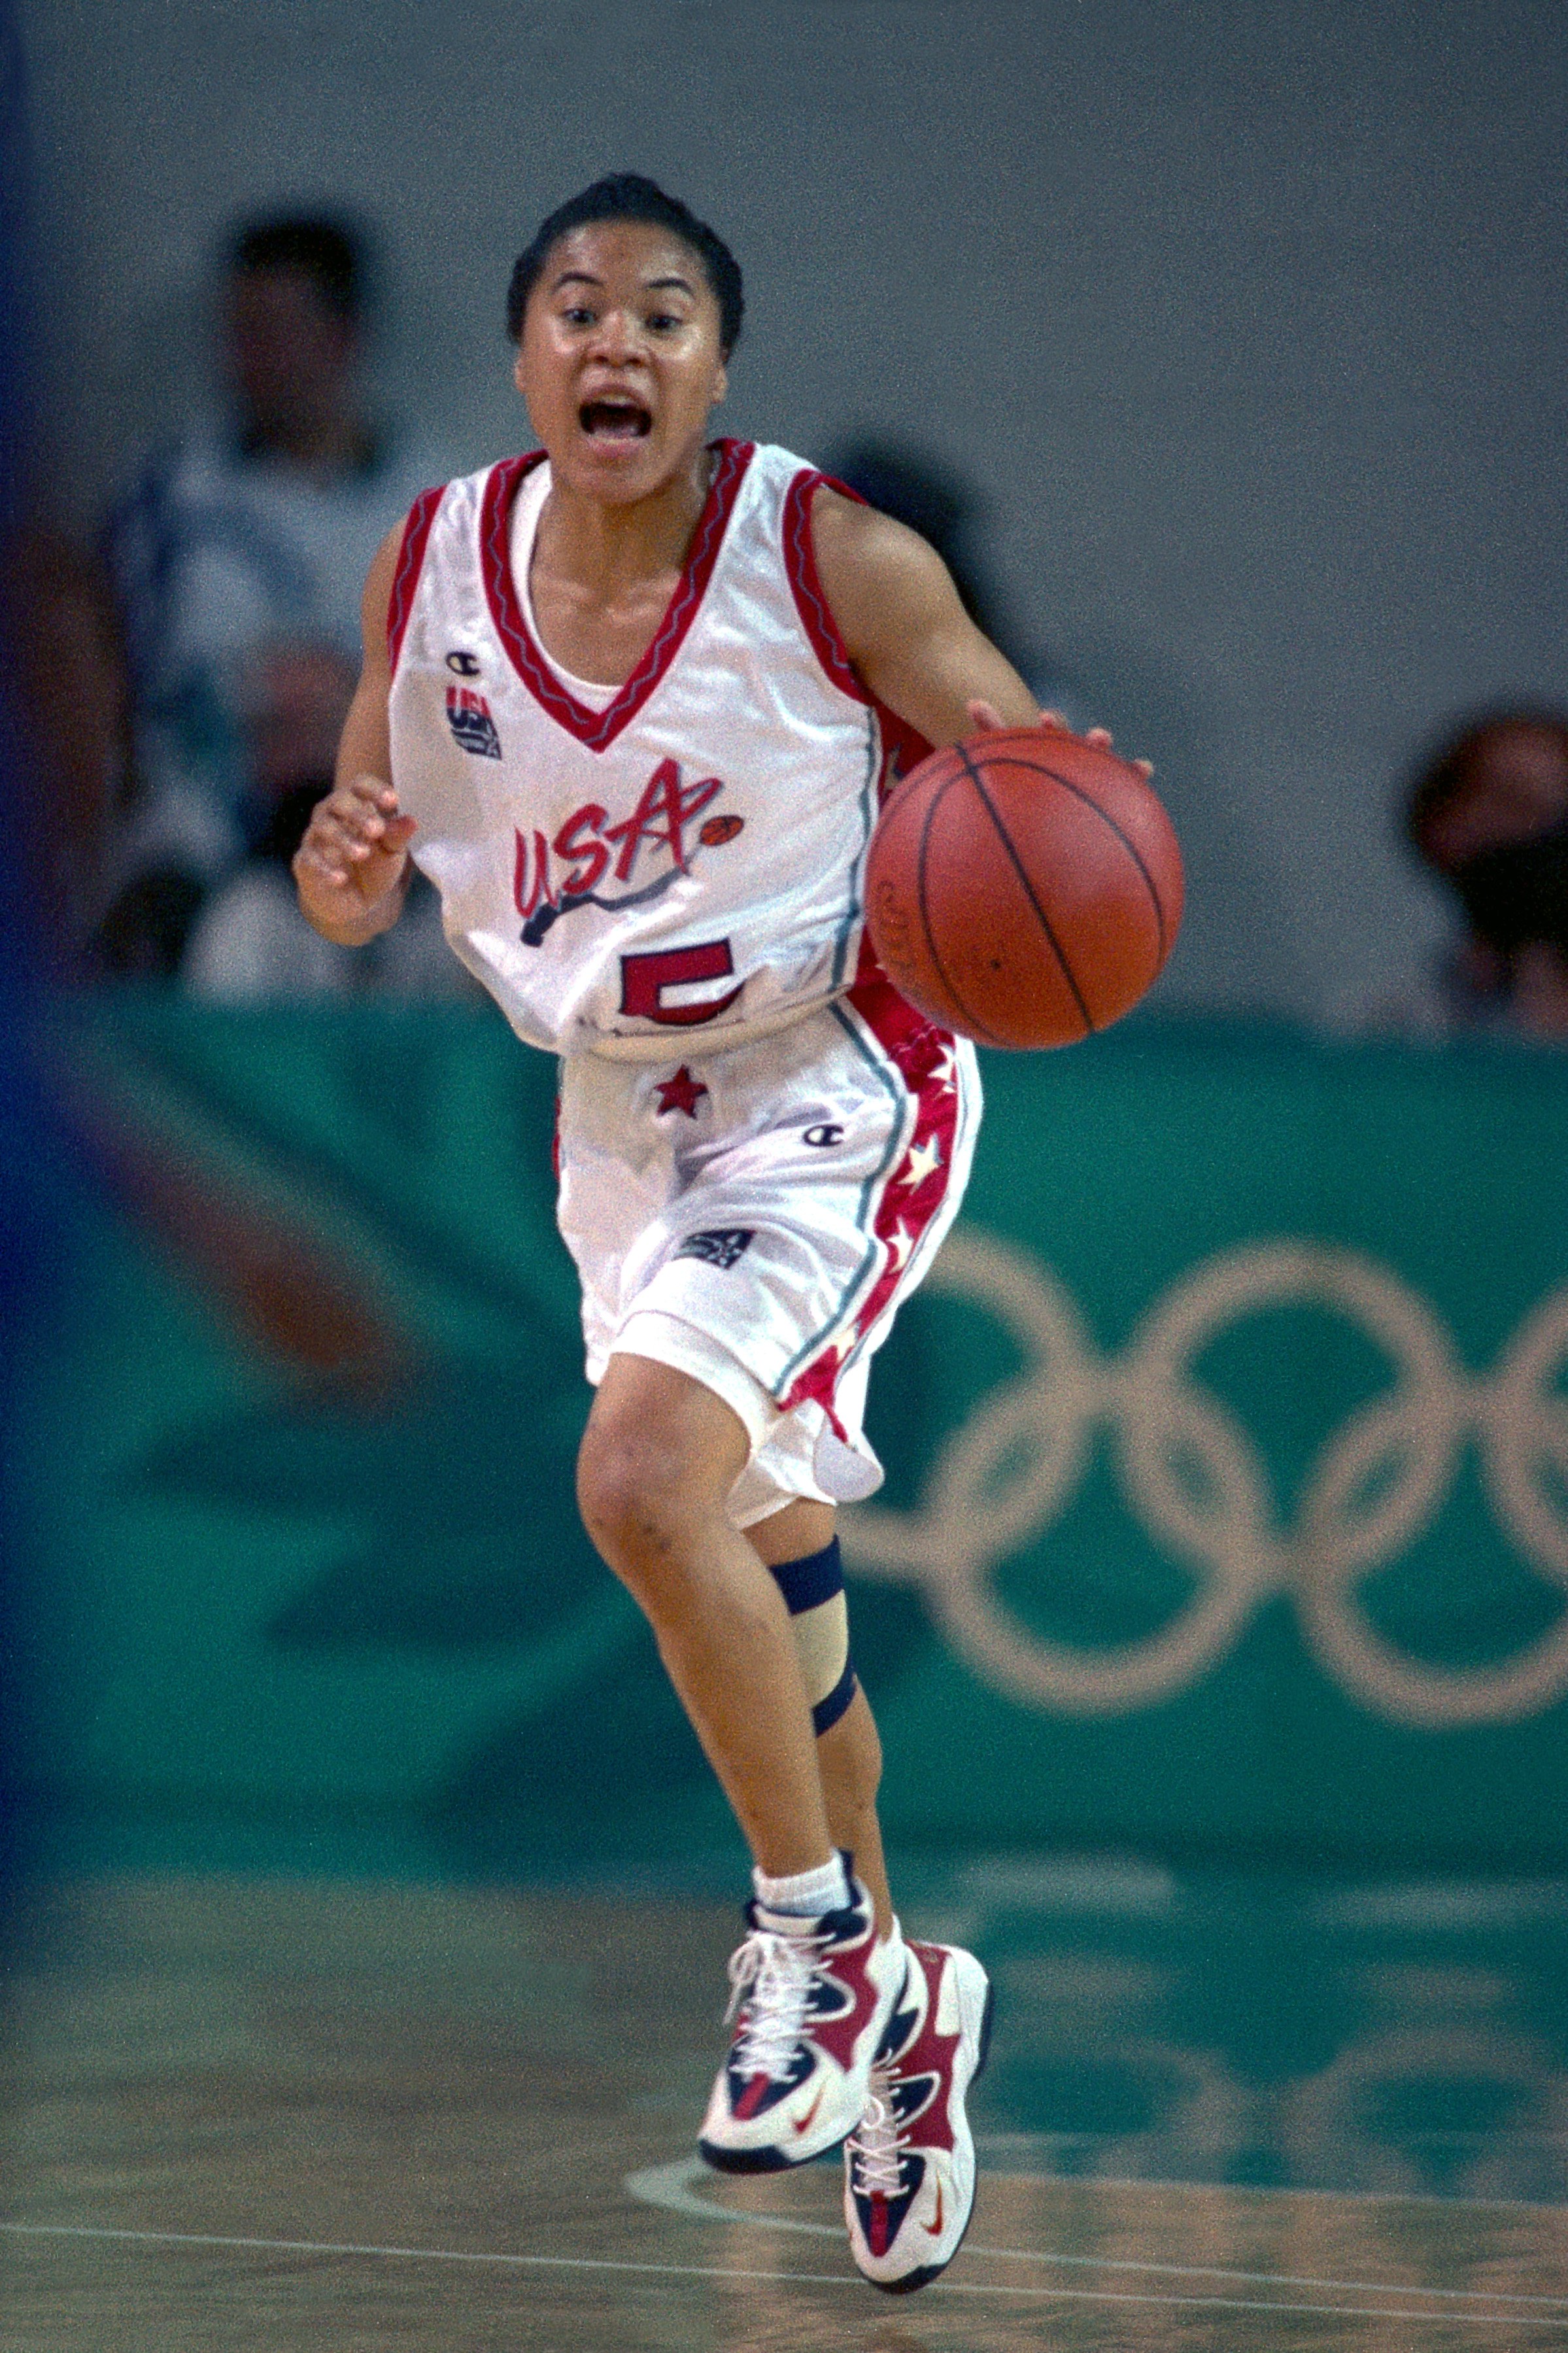 1996 Olympics: USA Basketball Women’s National Team vs Cuba National Team